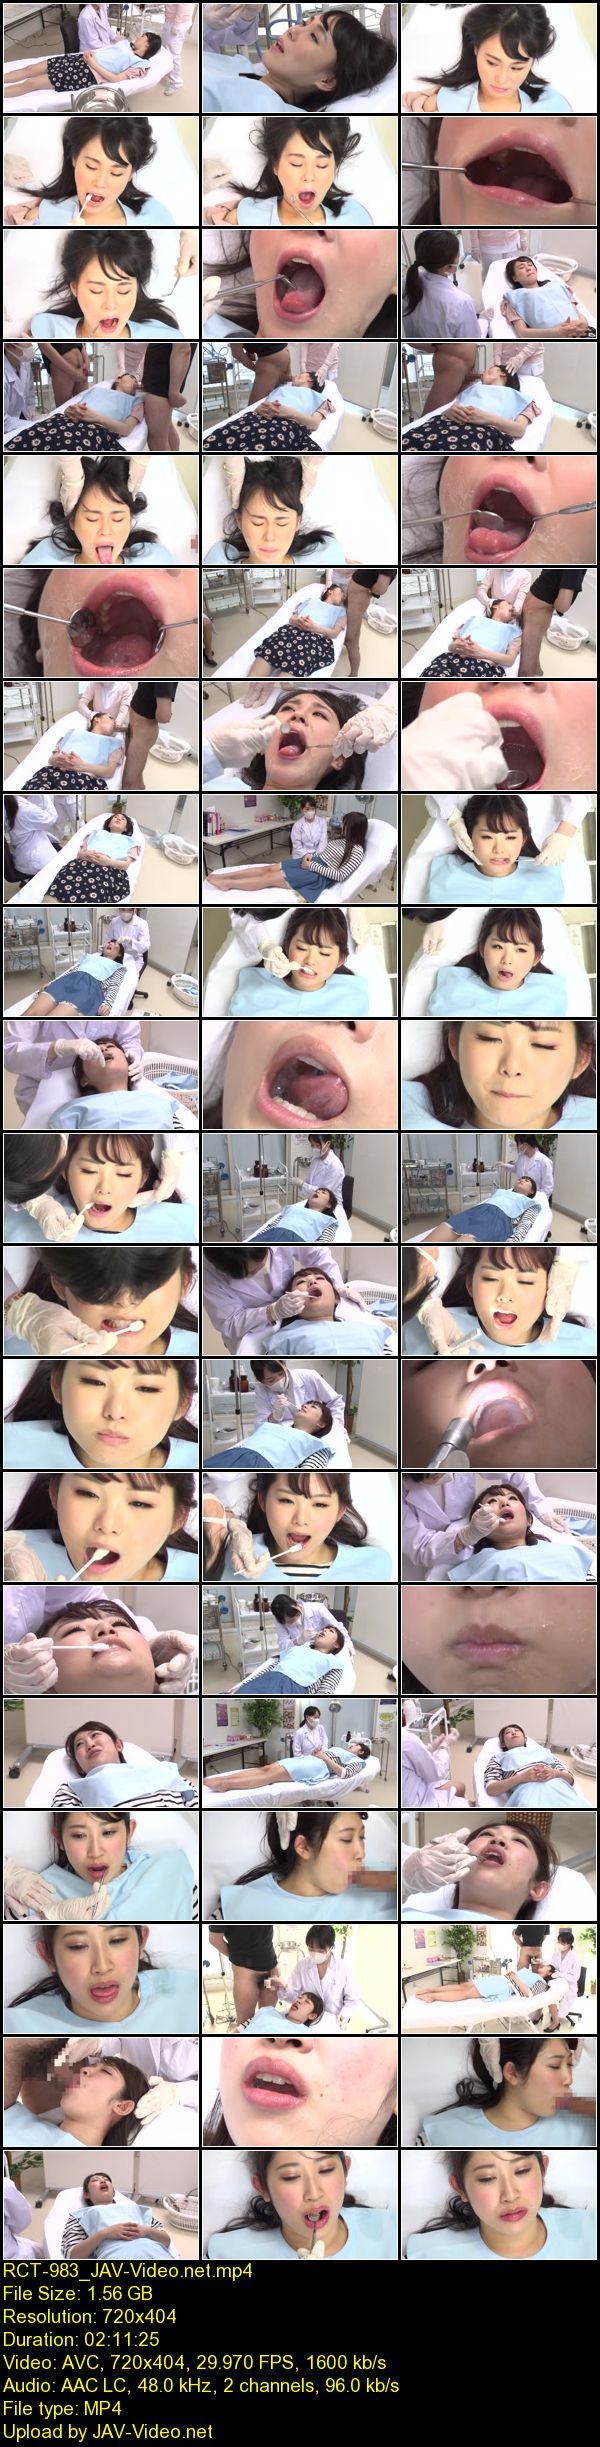 JAV Download Yuzu Kitagawa [RCT 983] ワイセツ歯科女医とグルになって患者の口内にバレないようにザーメン発射... 120分 コスチューム 2017 05 18